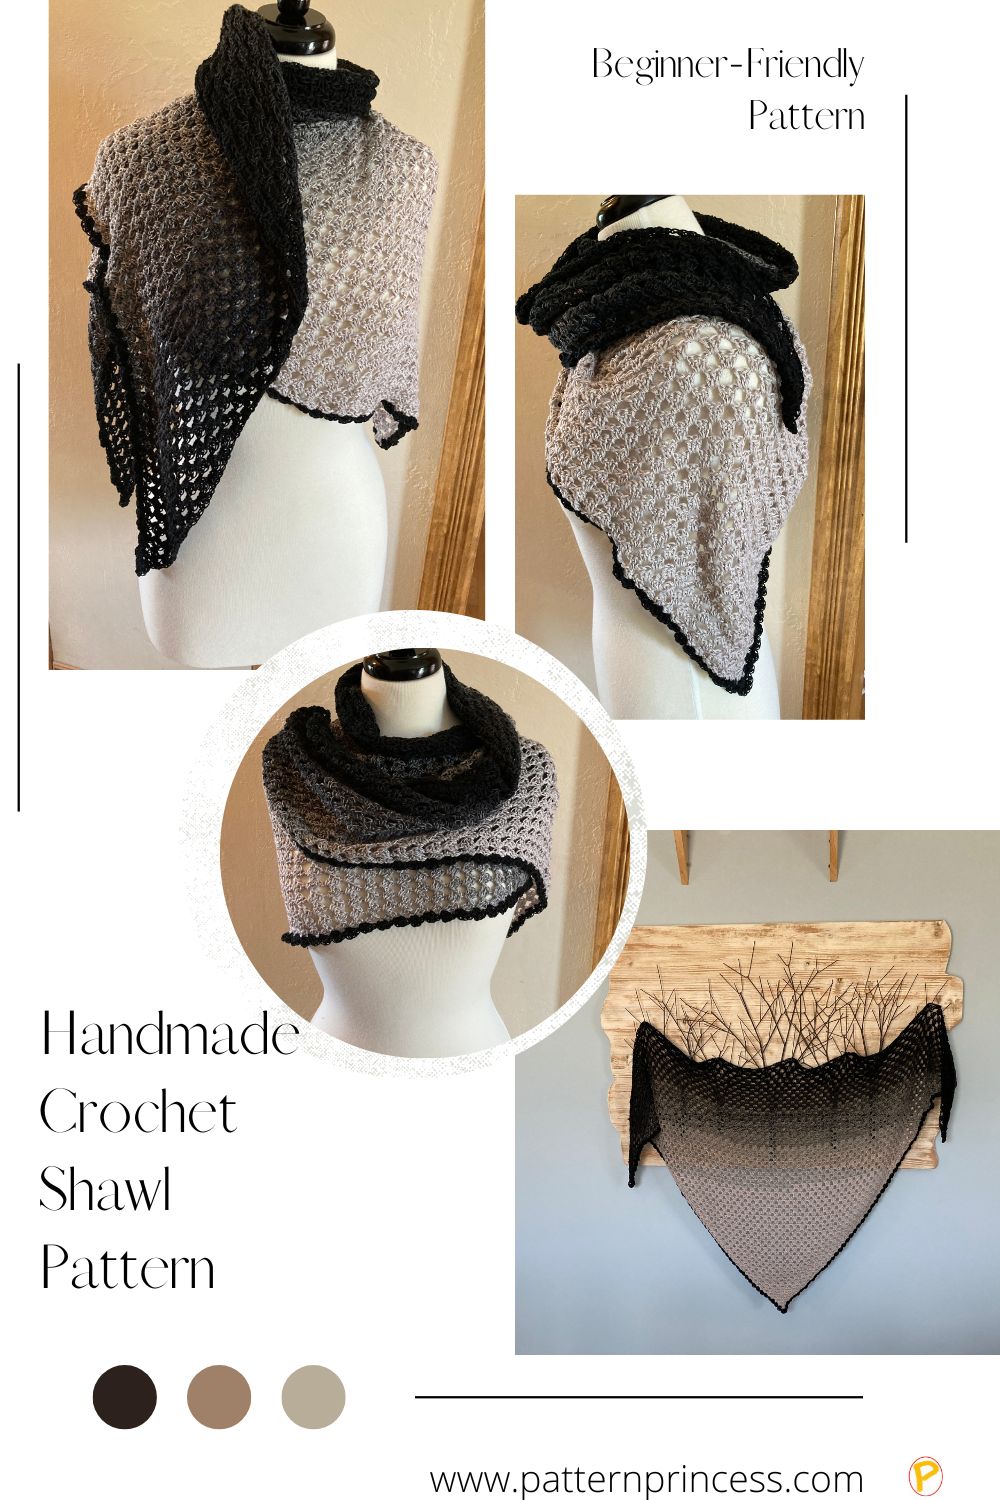 Handmade Crochet Shawl Pattern